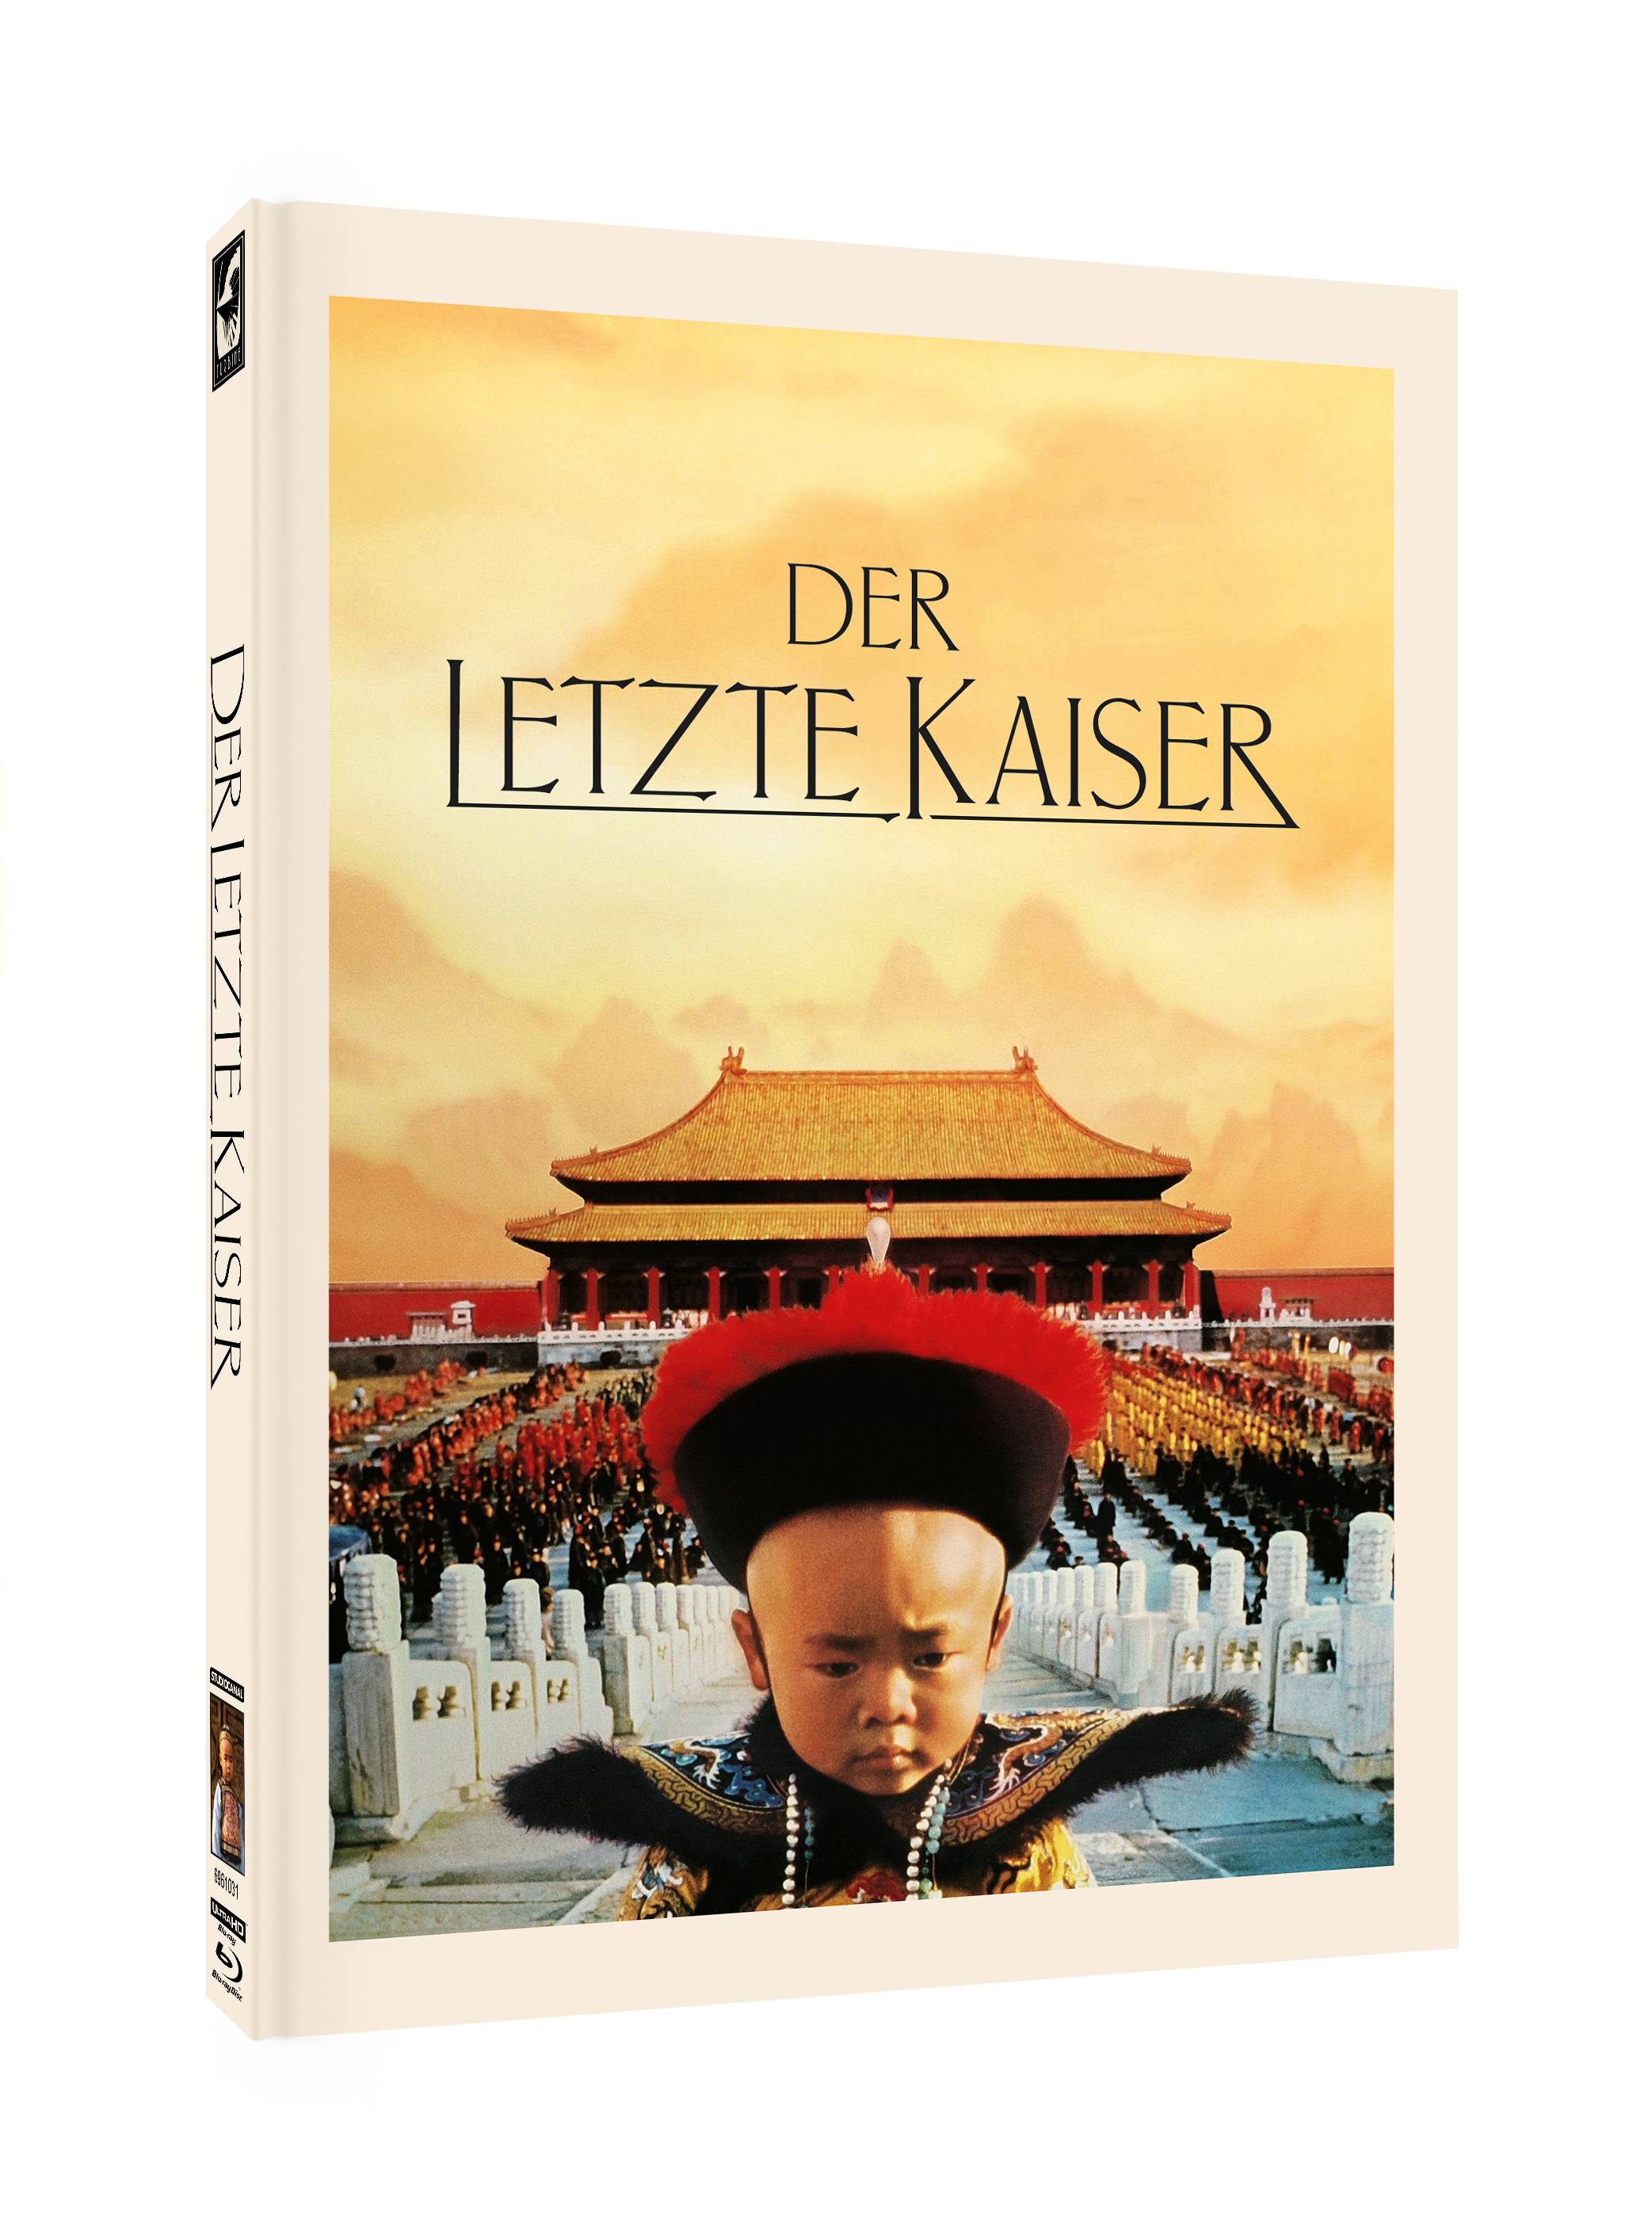 Der letzte Kaiser | Limitiertes Mediabook (4K Ultra HD Blu-ray + 3 Blu-rays) Cover B (500 Stück)